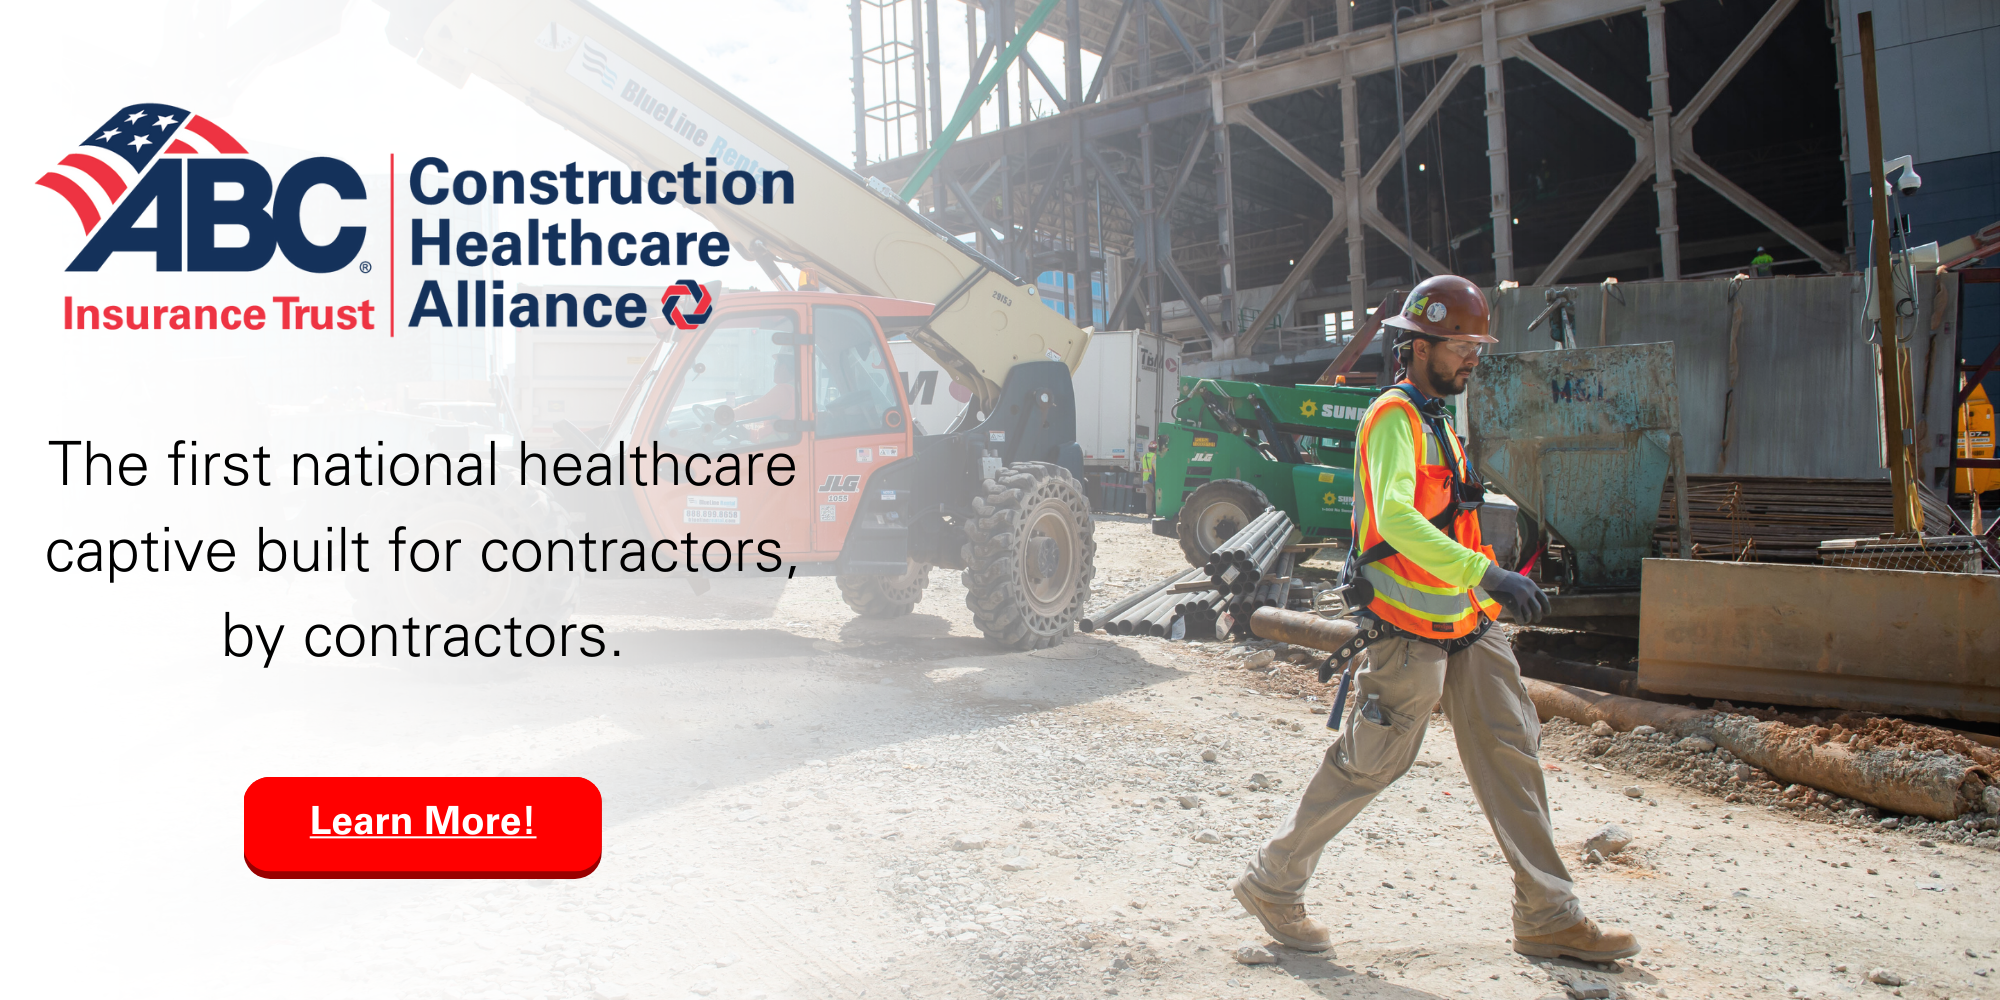 Construction Healthcare